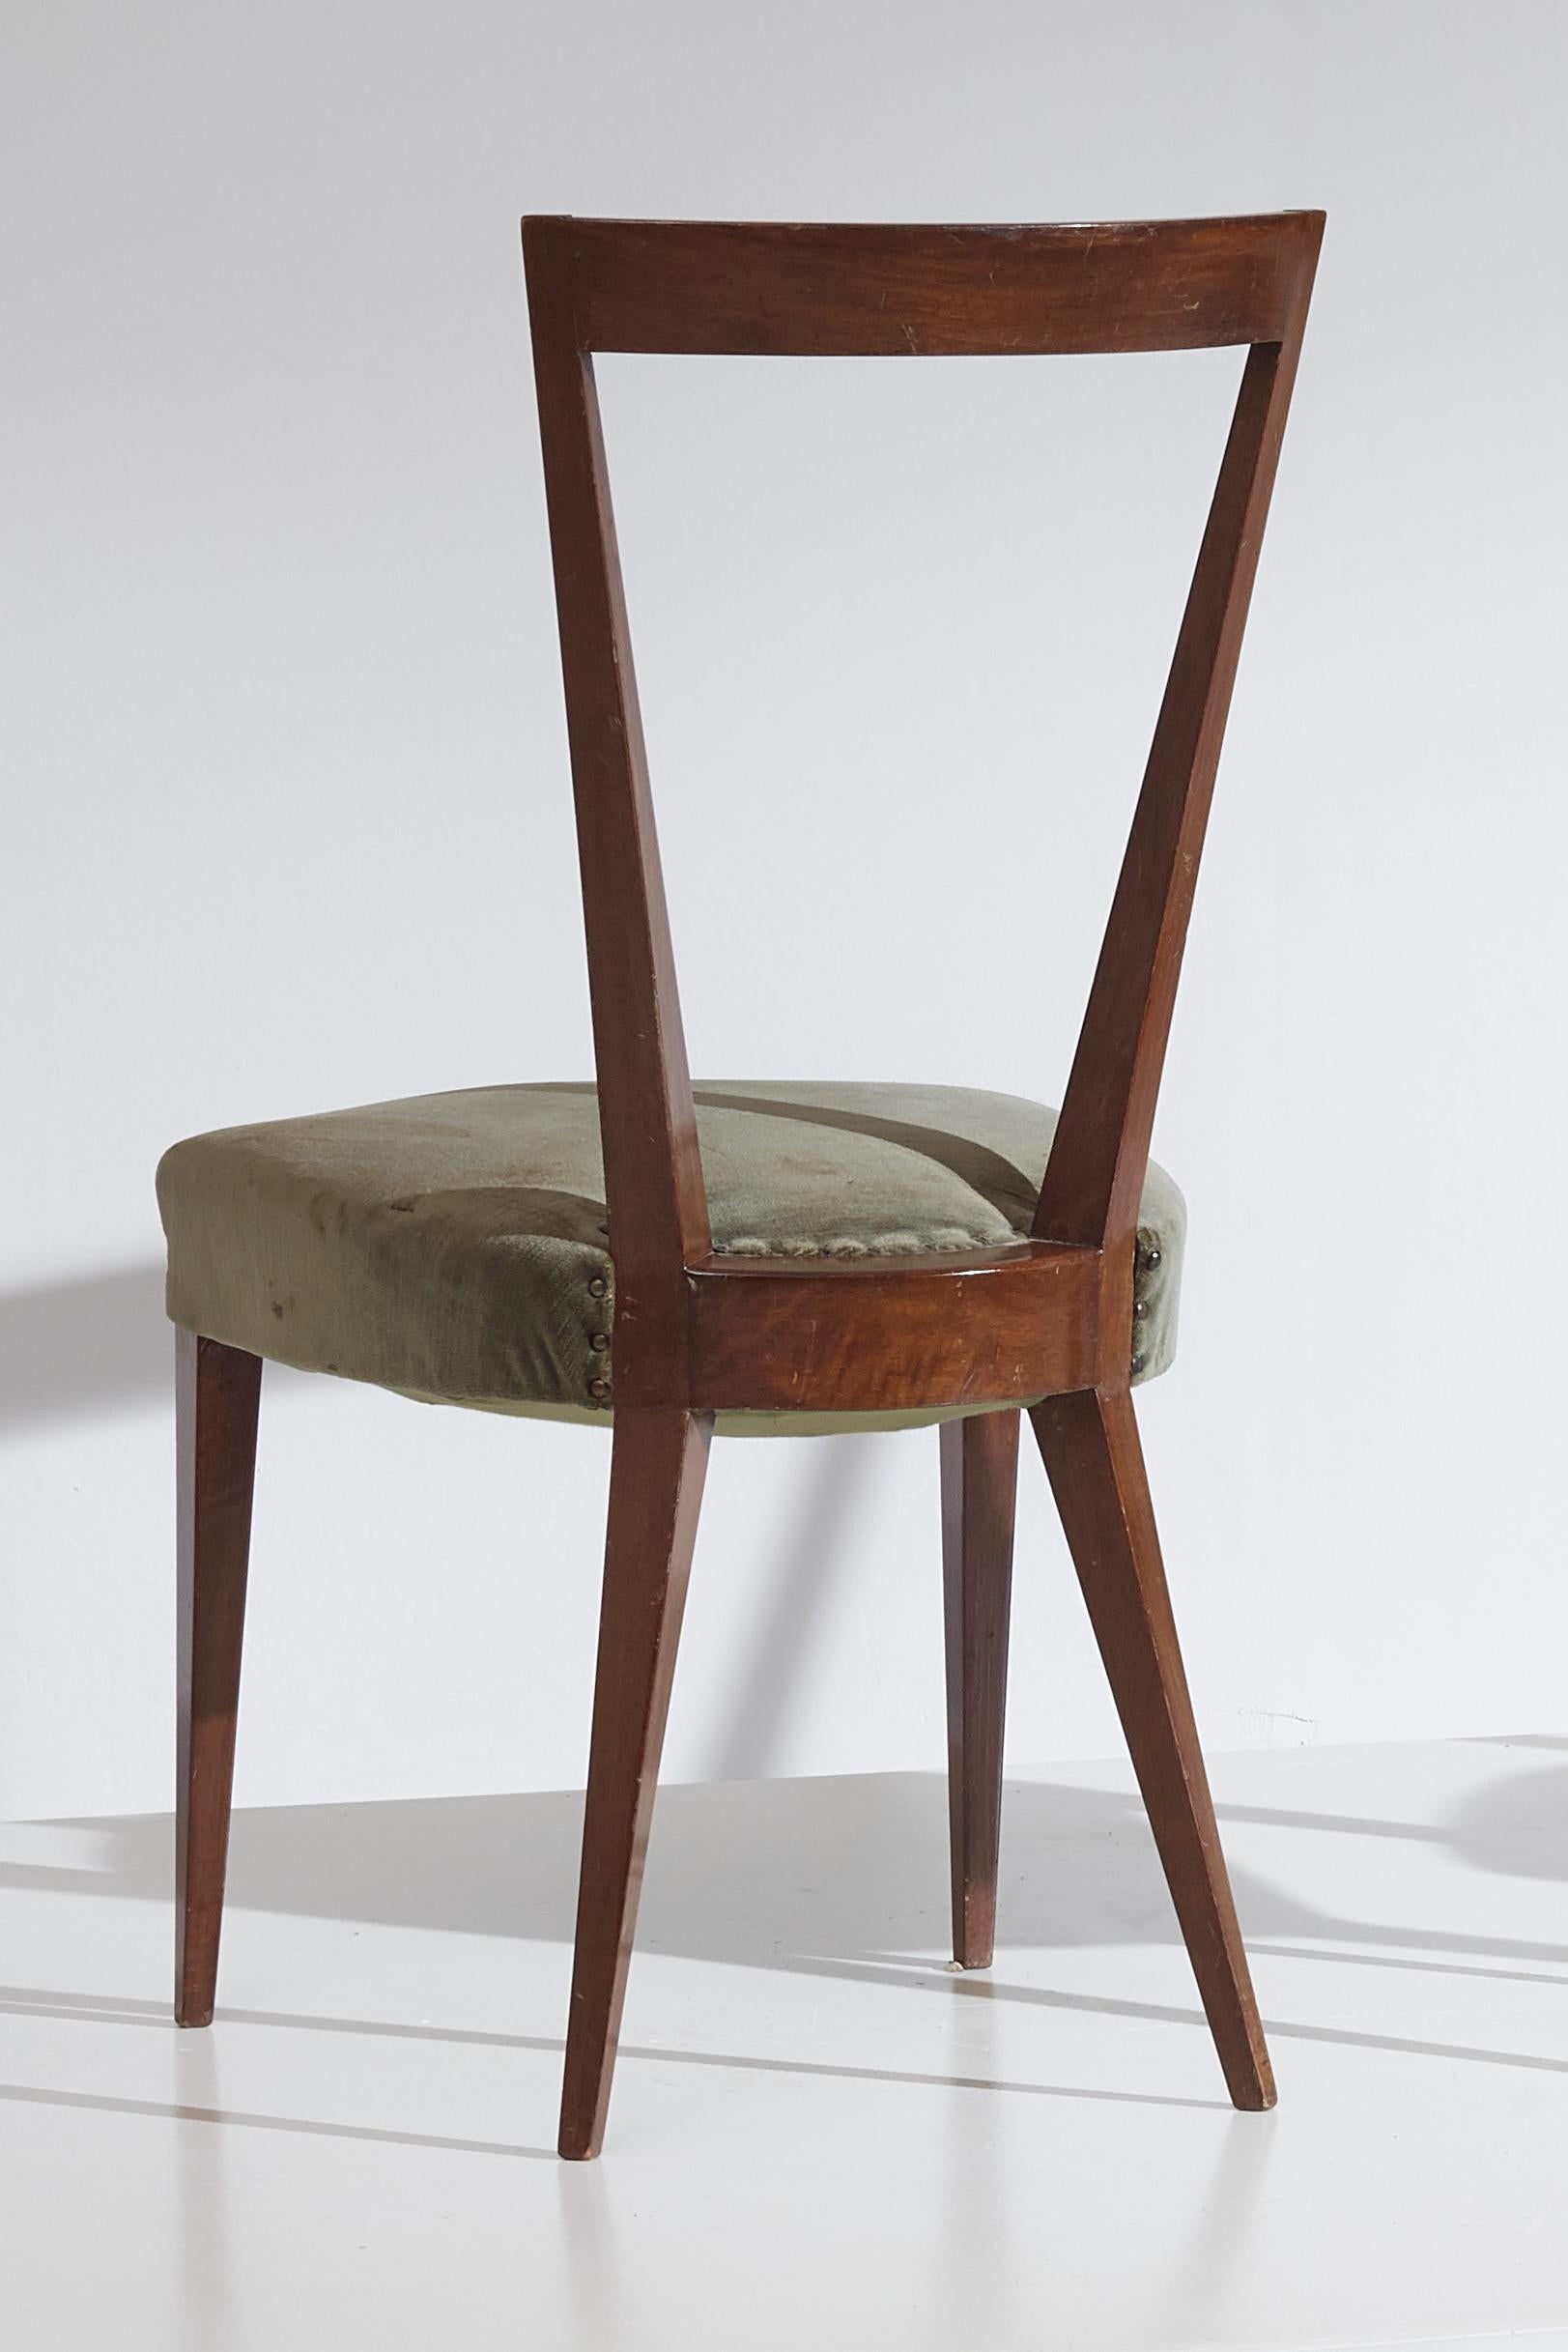 Gio Ponti for Casa E Giardino 1938 - Set of 4 Chairs in Walnut and Velvet Fabric 1